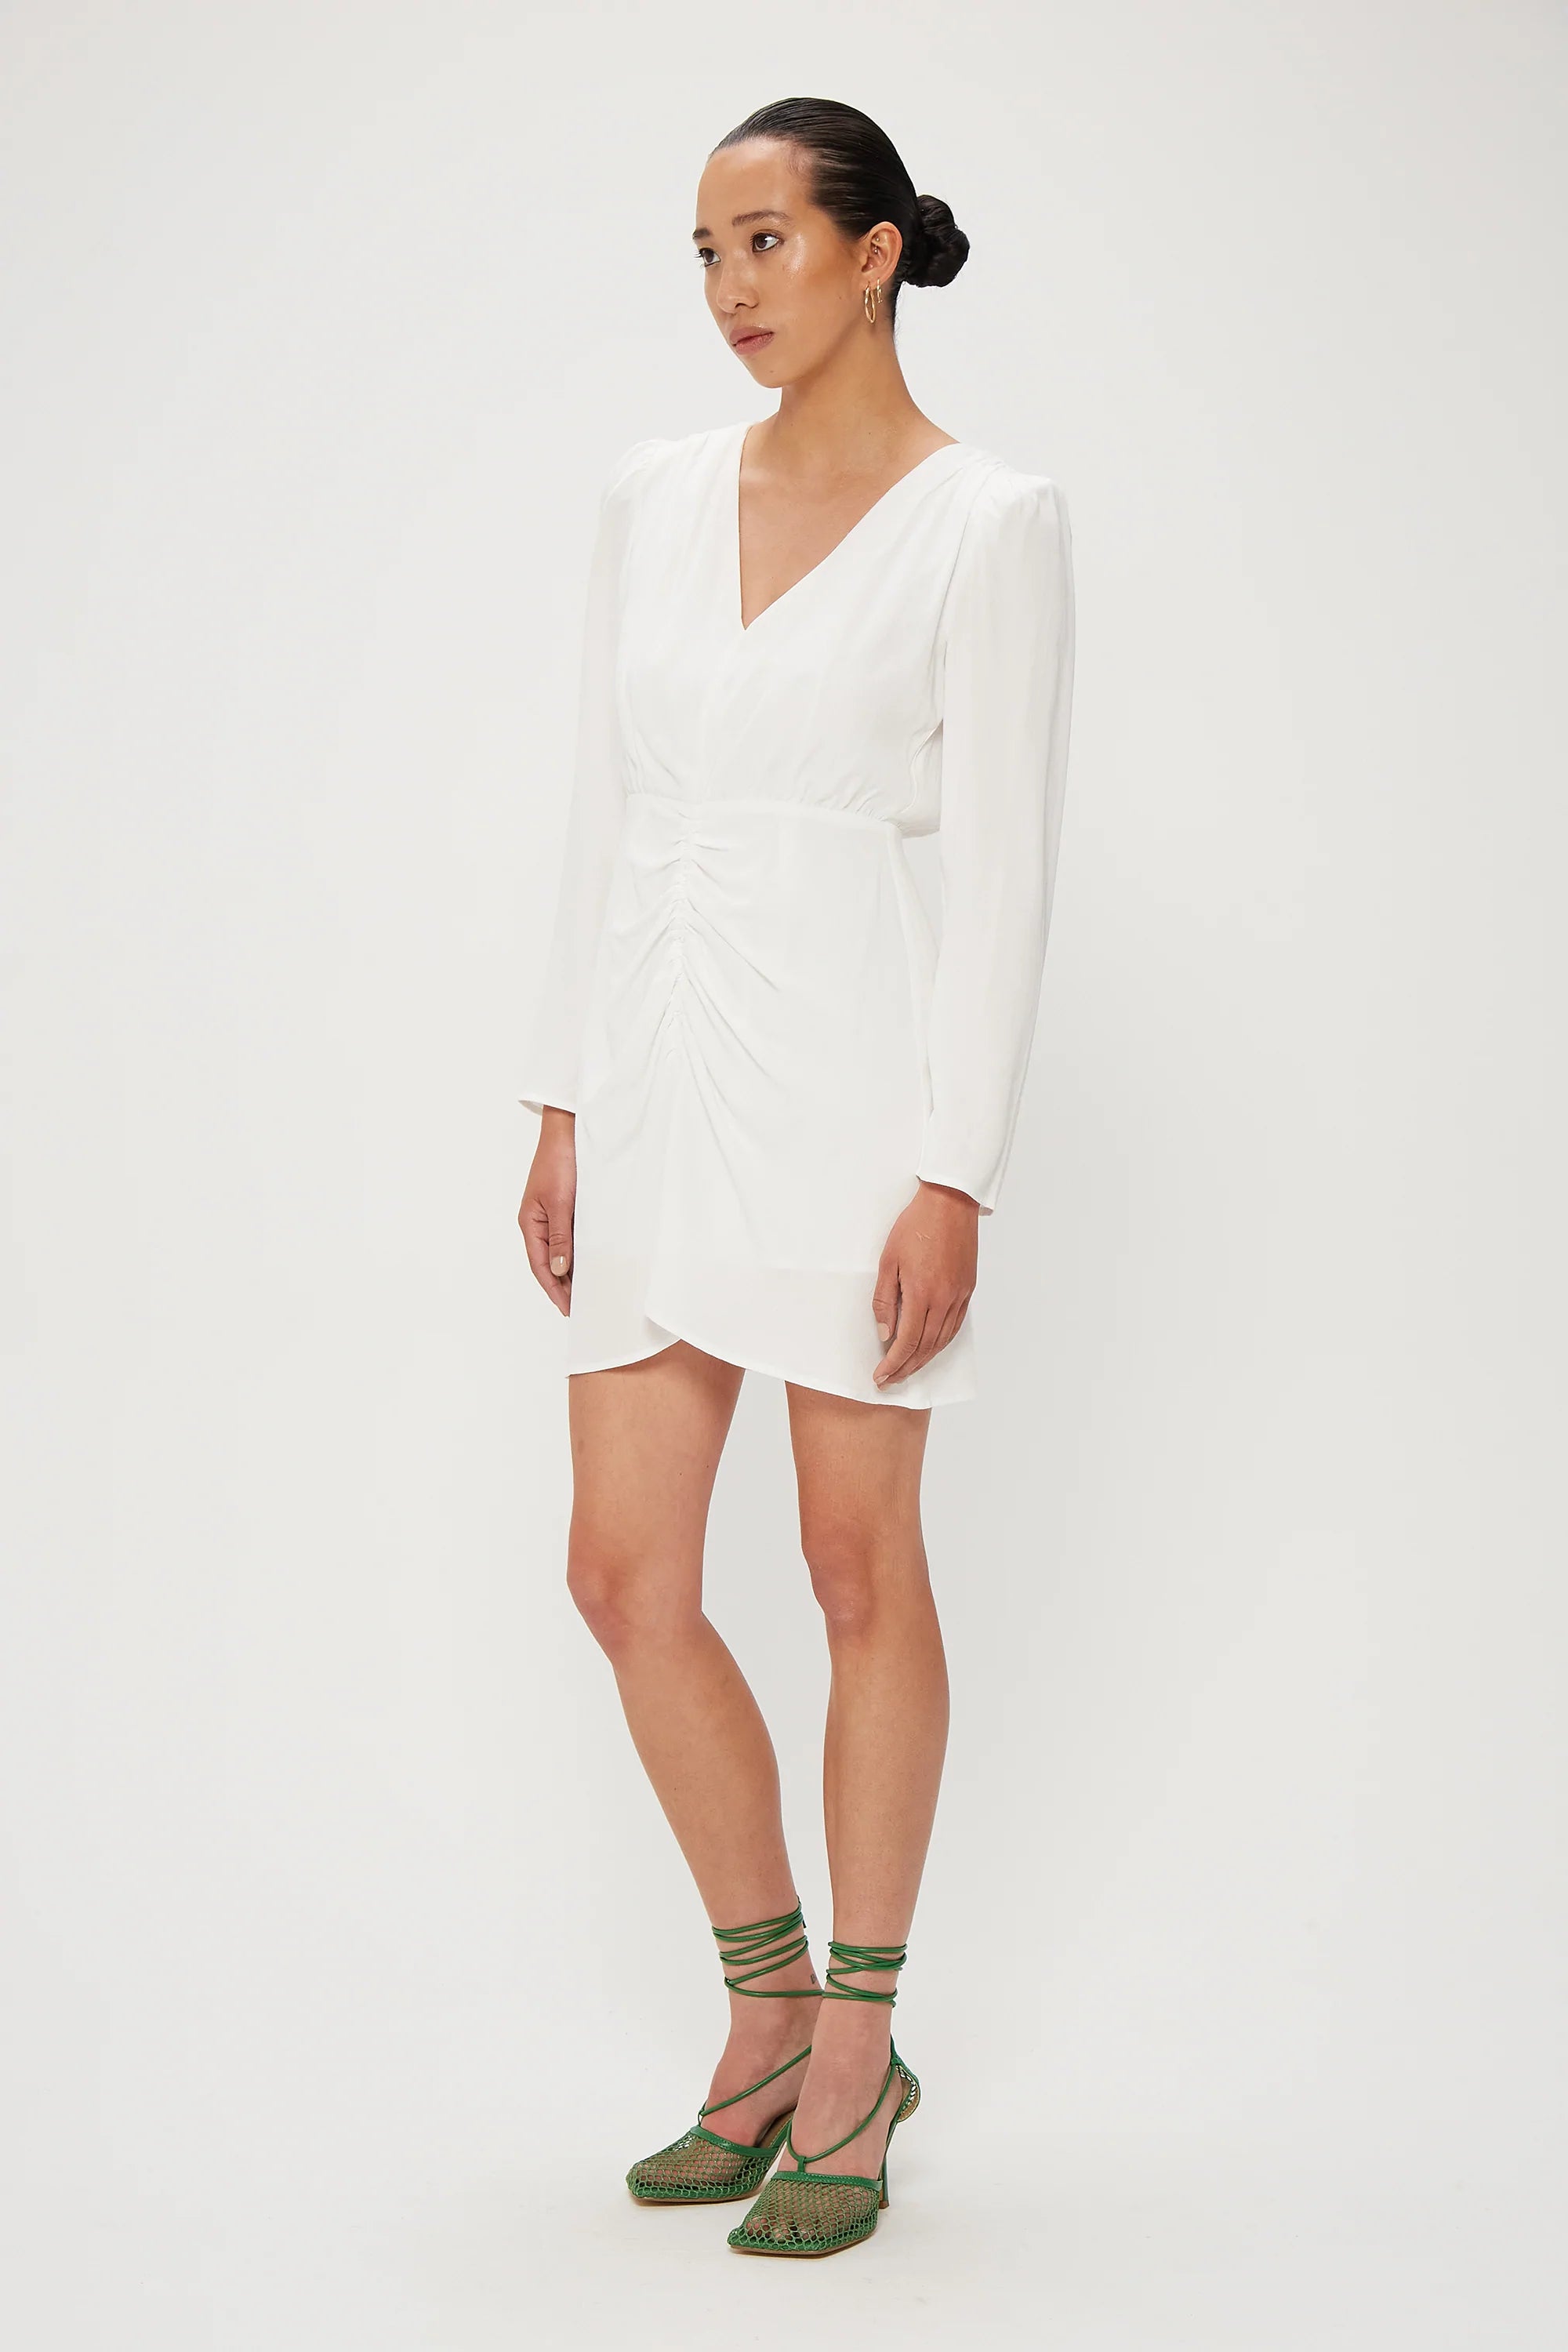 Third Form Full Bloom LS Mini Dress - Off White